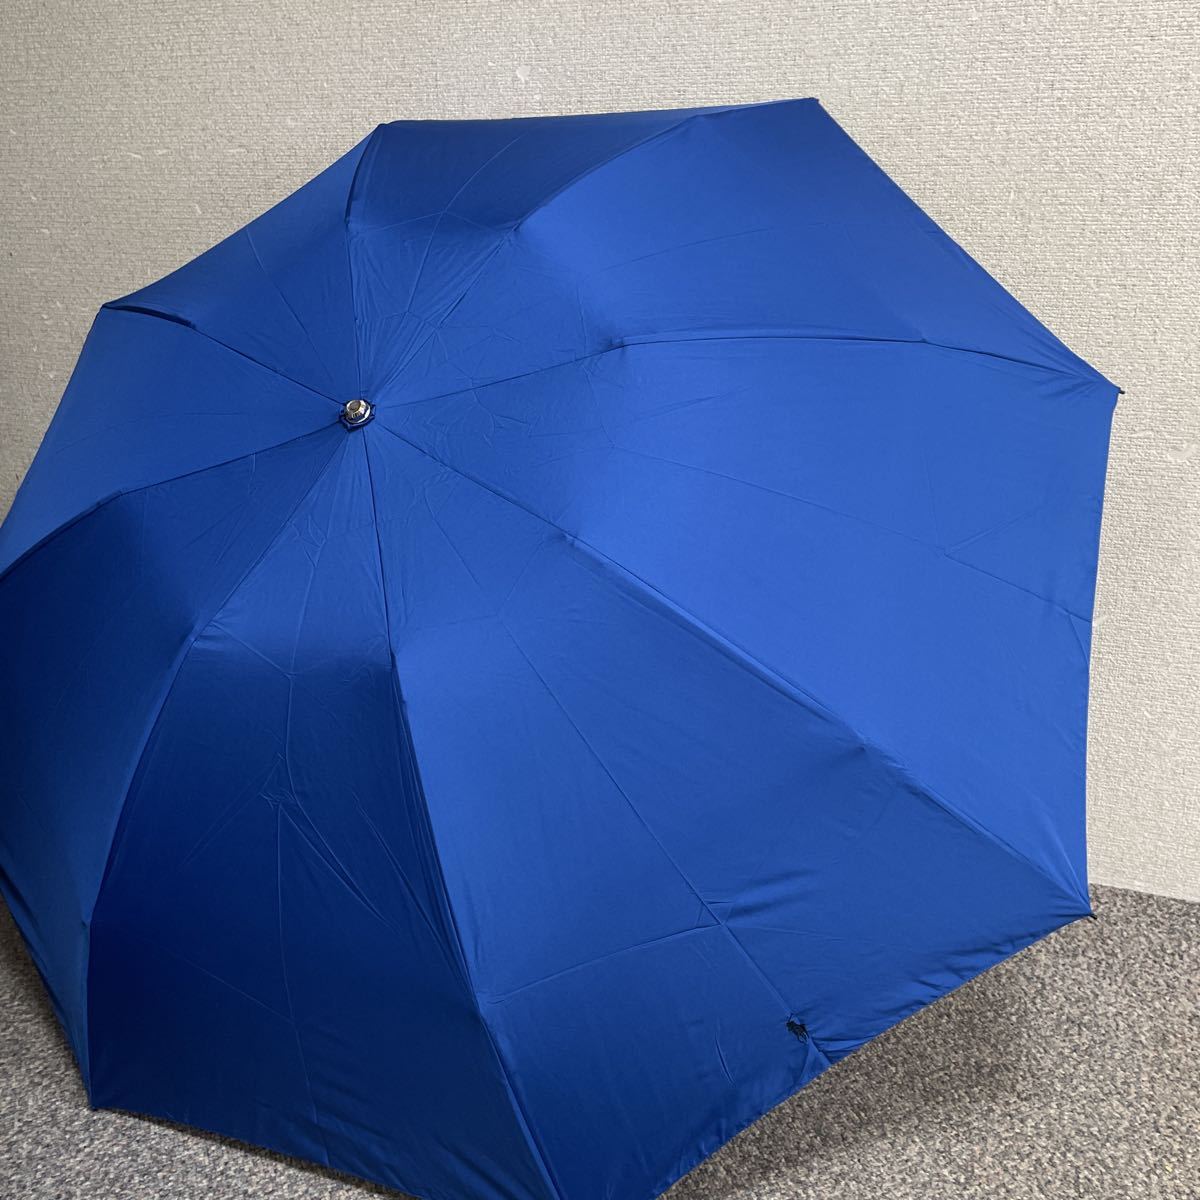  new goods Ralph Lauren umbrella umbrella folding umbrella for man large size 65